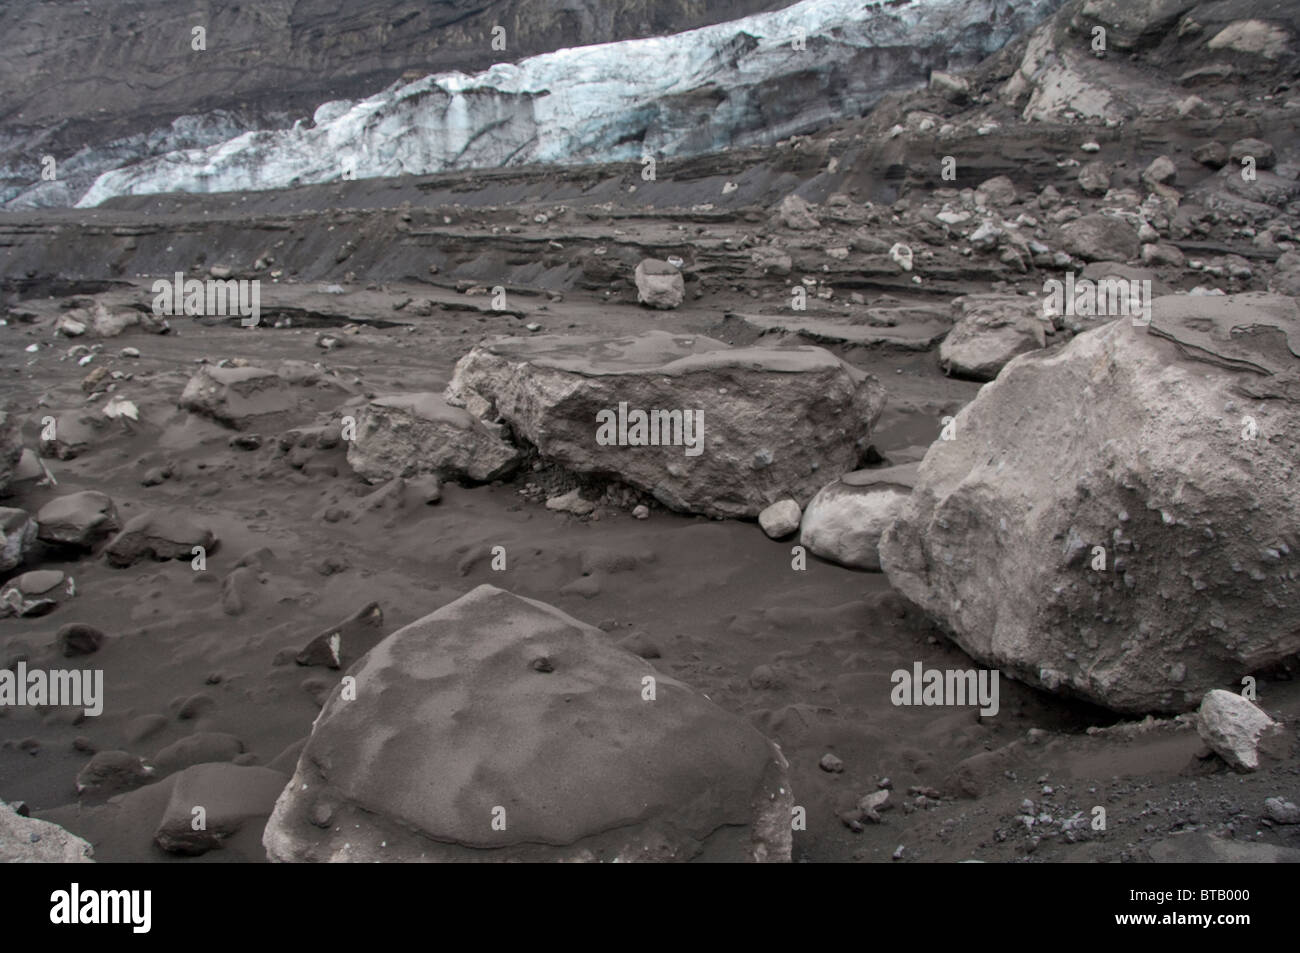 L'Islanda, Porsmork Park, ghiacciaio Gigjokull dopo la molla 2010 eruzione del vulcano Eyjafjallajokull. Foto Stock